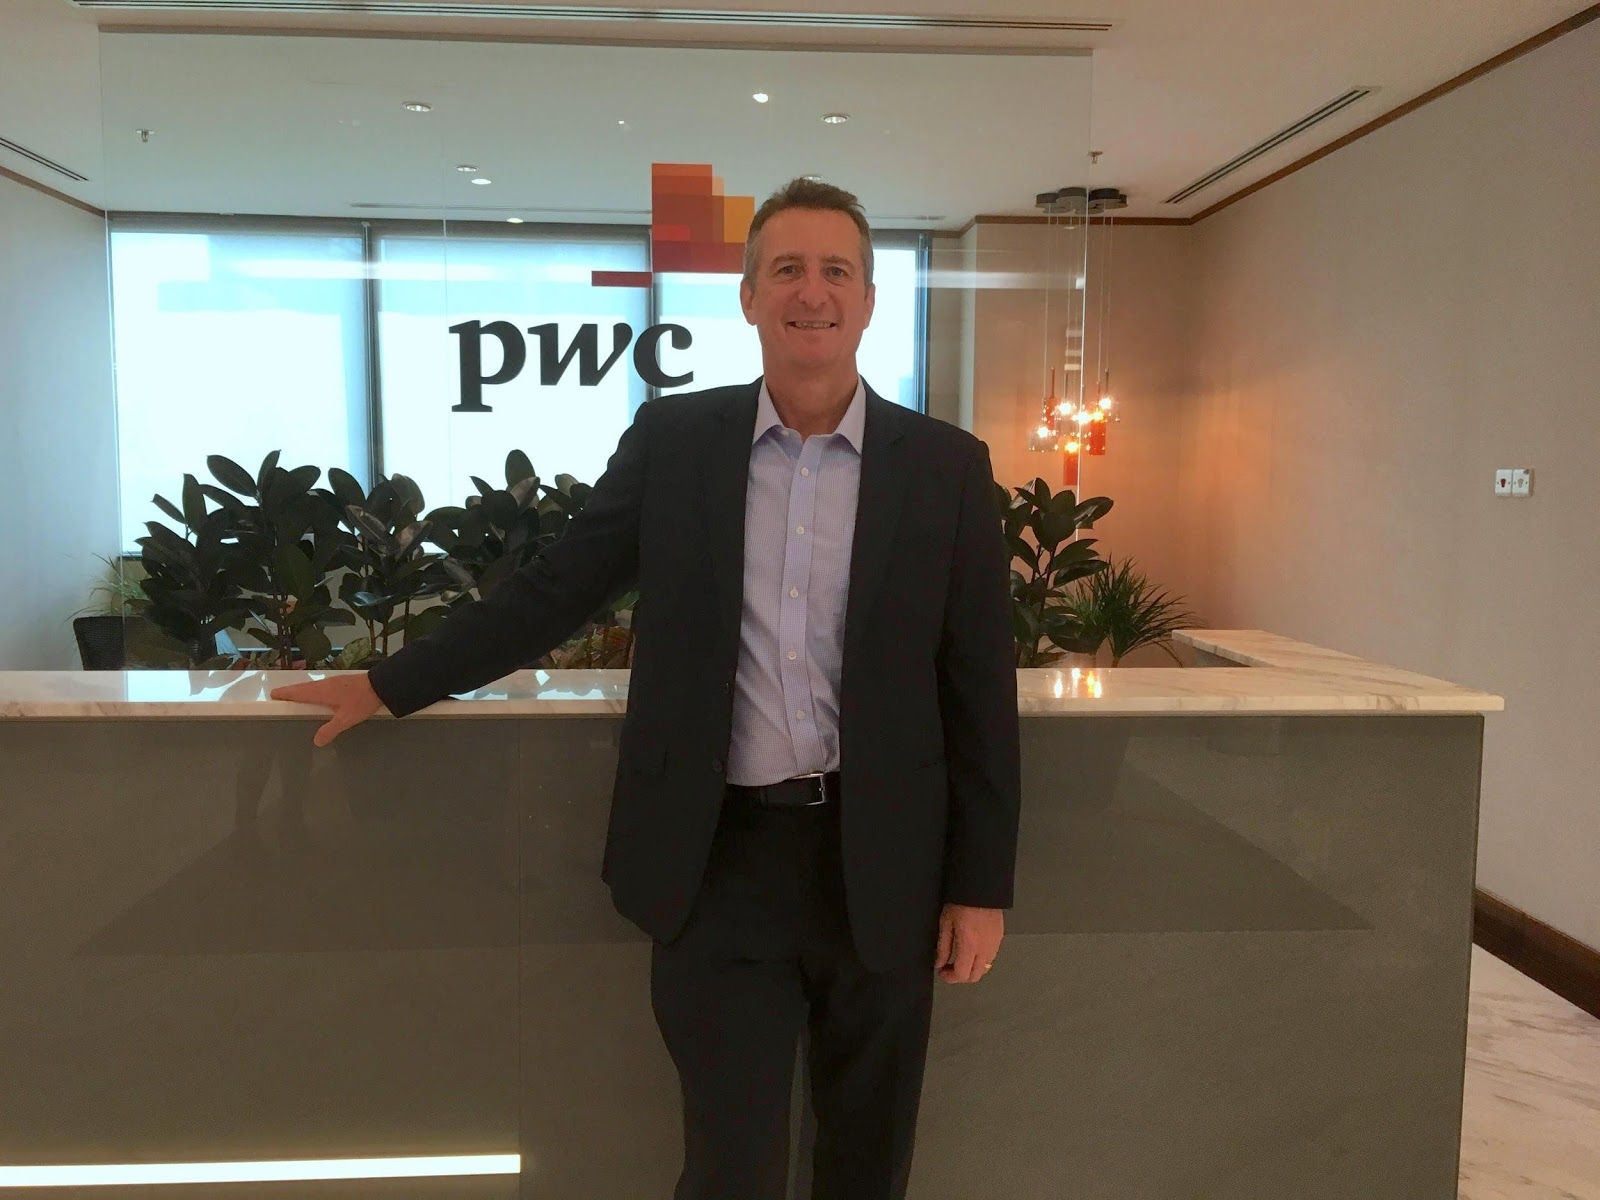 Greg Unsworth, digital business leader at PwC